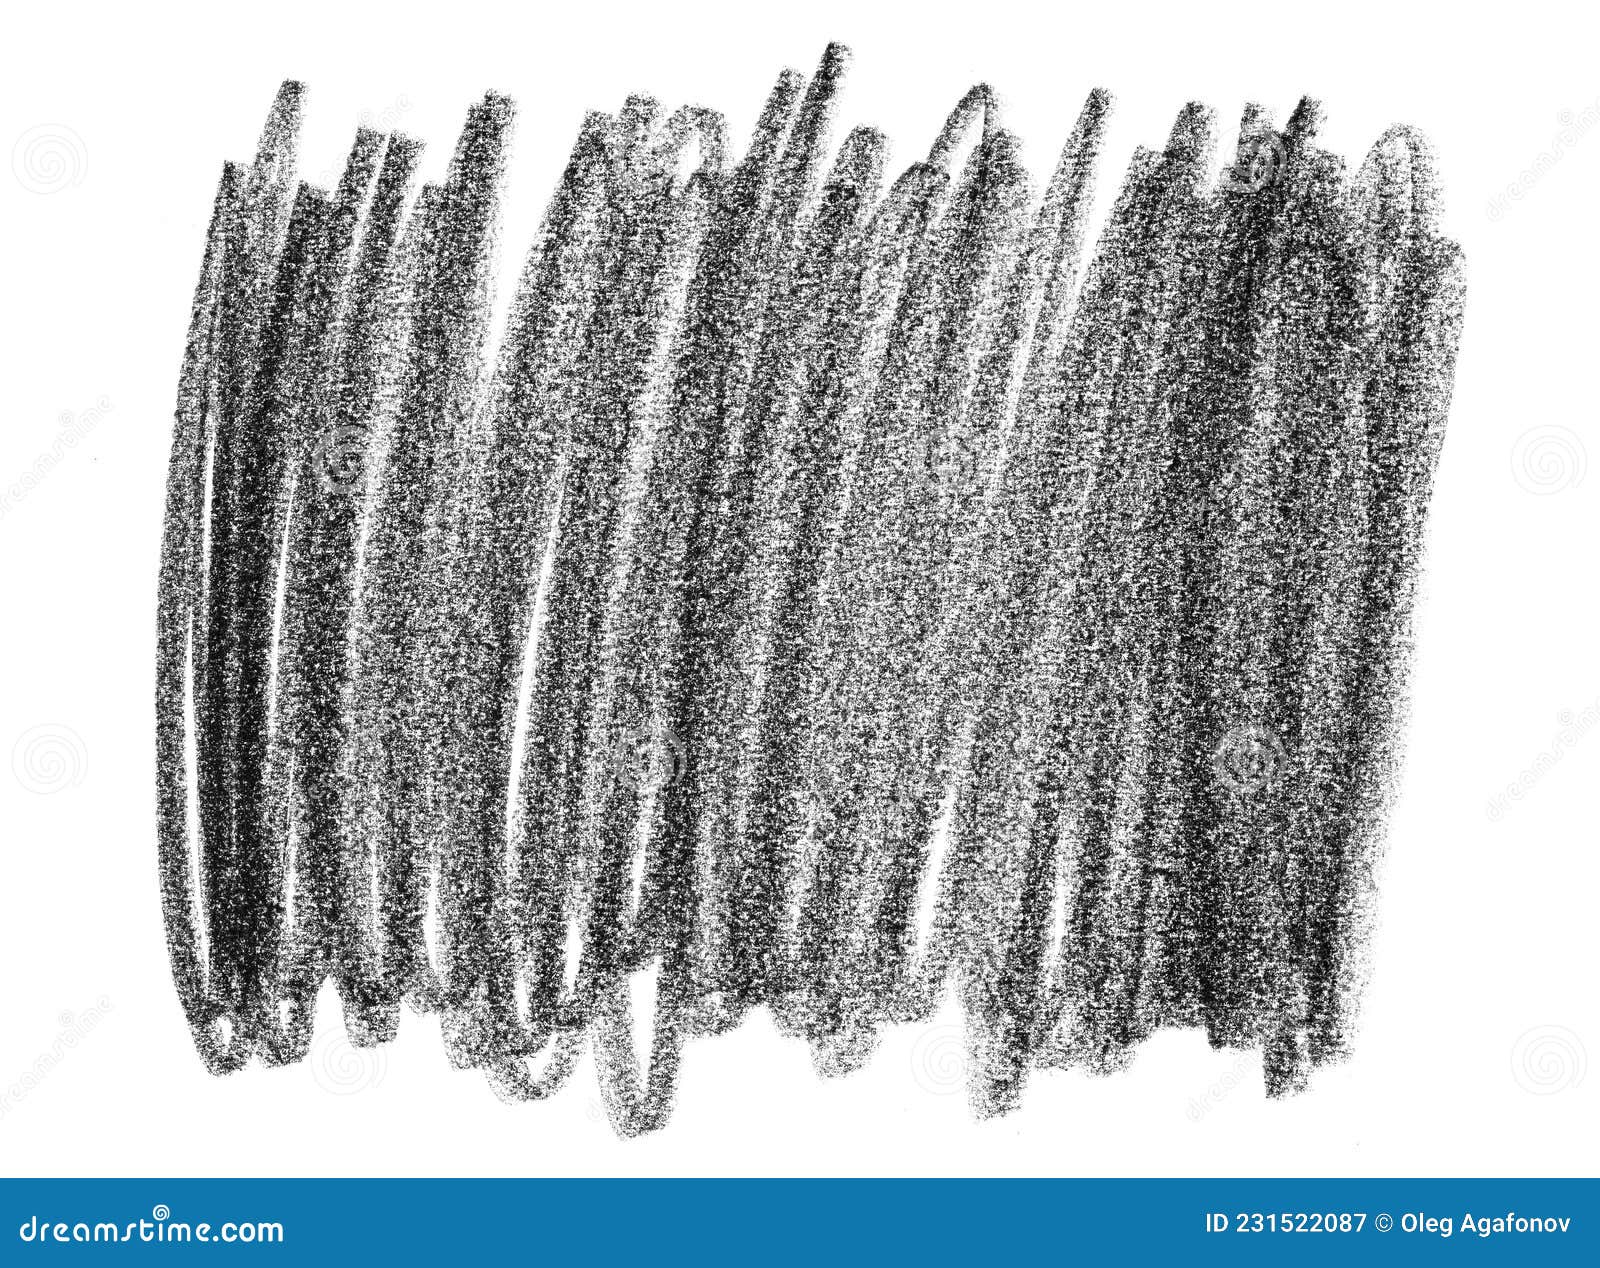 pencil drawing of a cute semi - fat british shorthair | Stable Diffusion